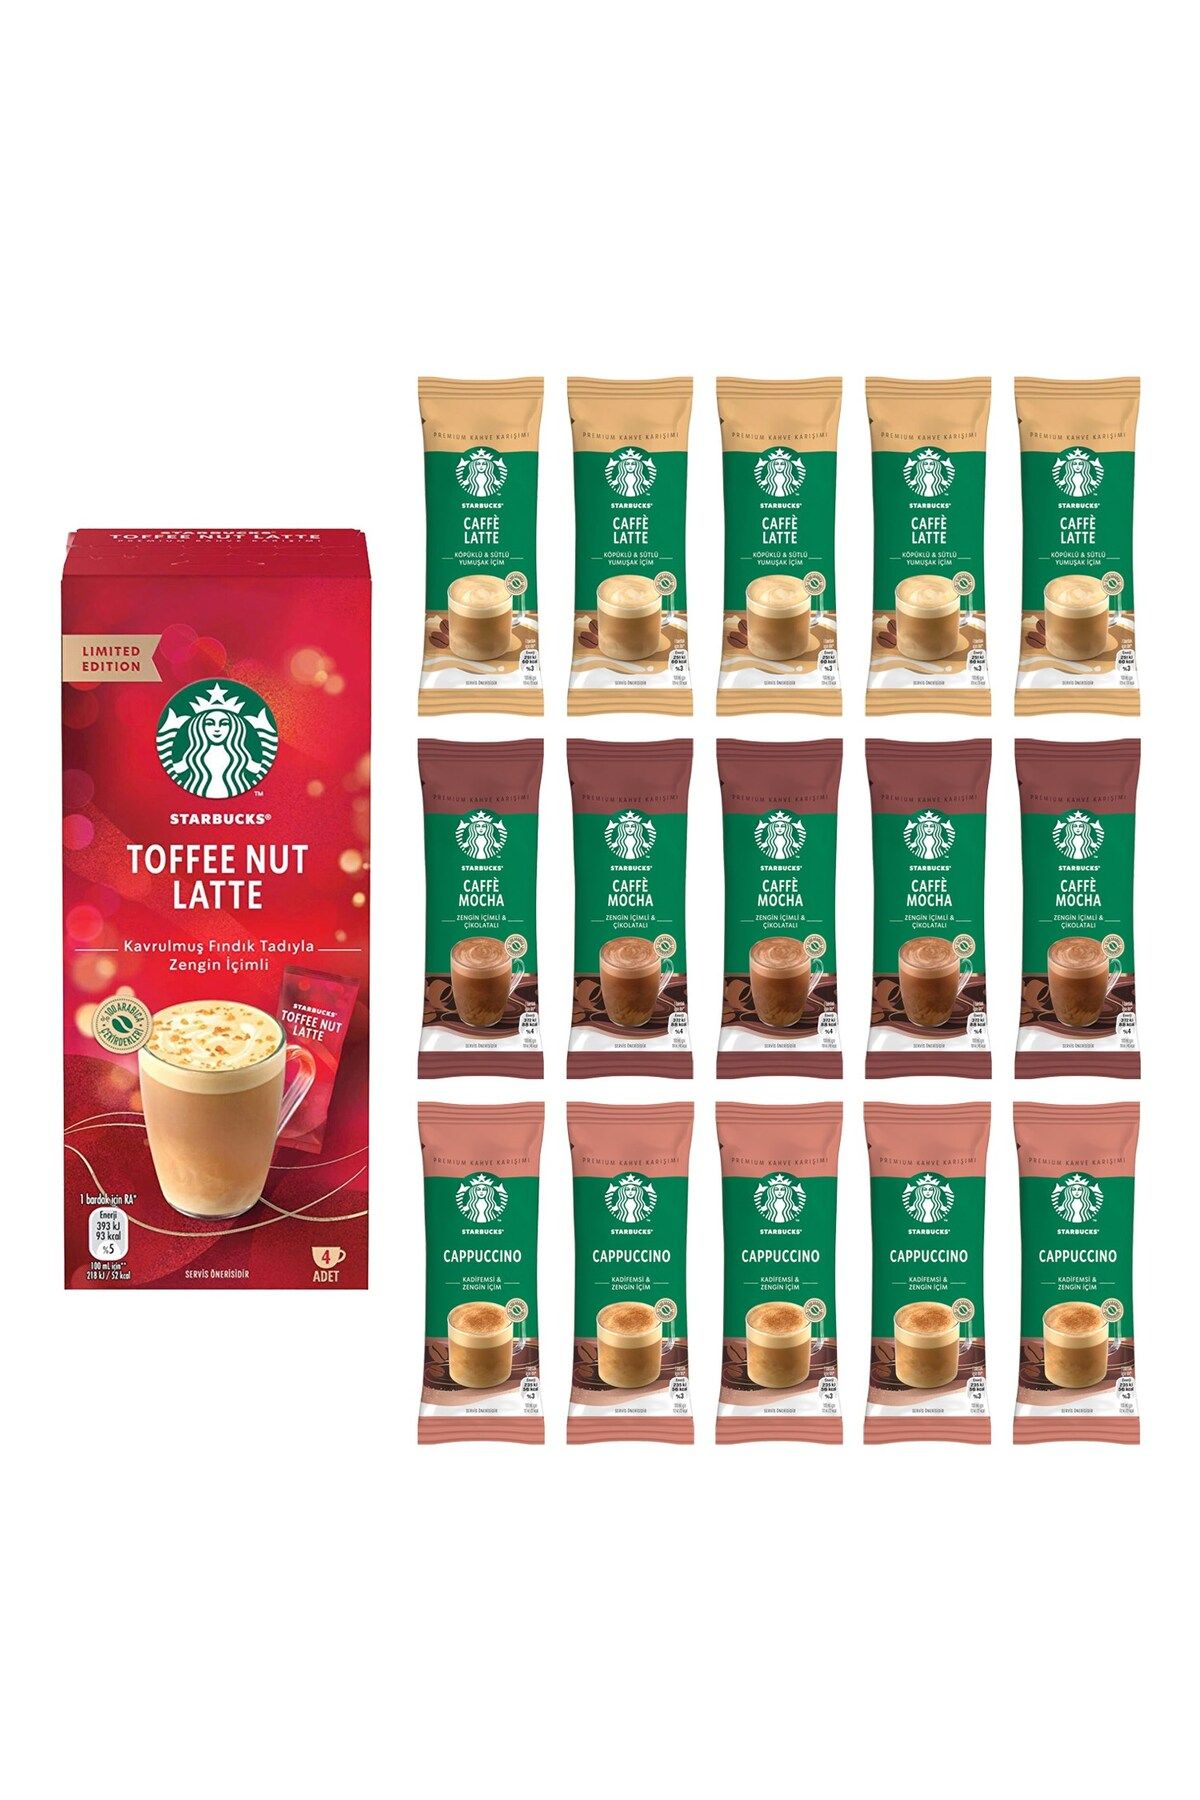 Starbucks Premium Kahve Karma Paket 19 lu